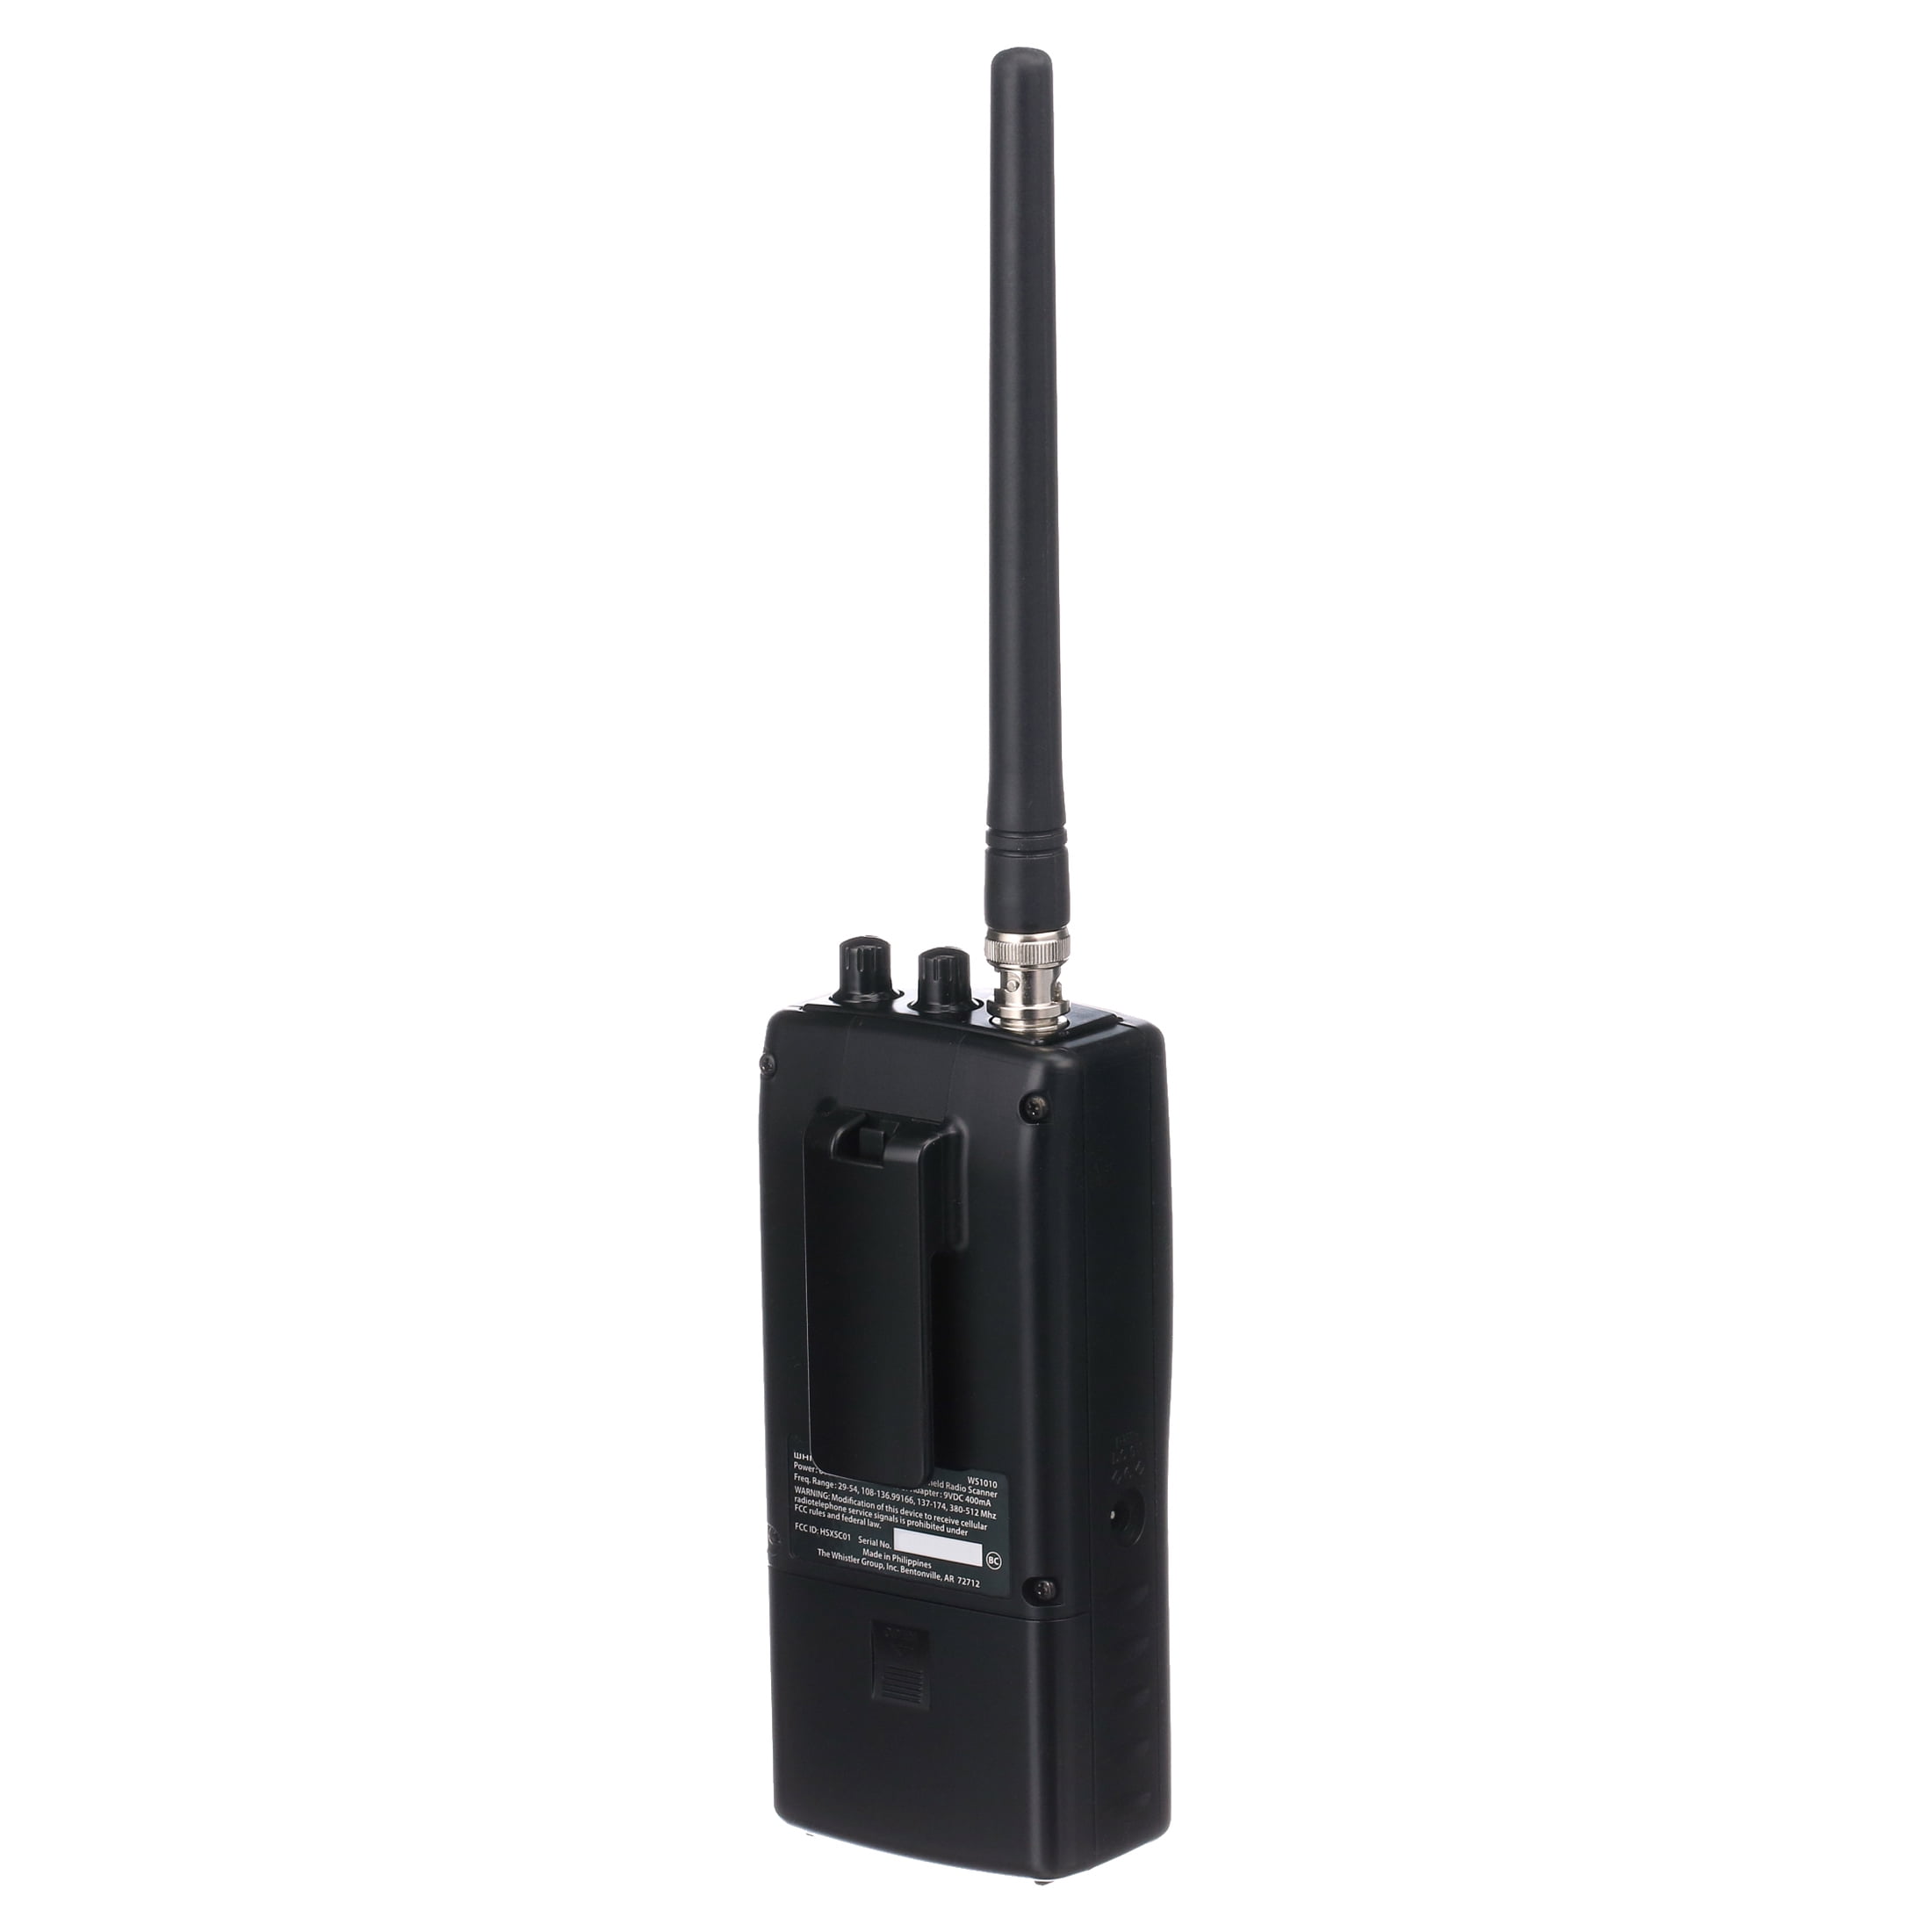 Whistler Handheld Analog Radio Scanner WS1010W - 200 Channel, BRAND NEW - USA